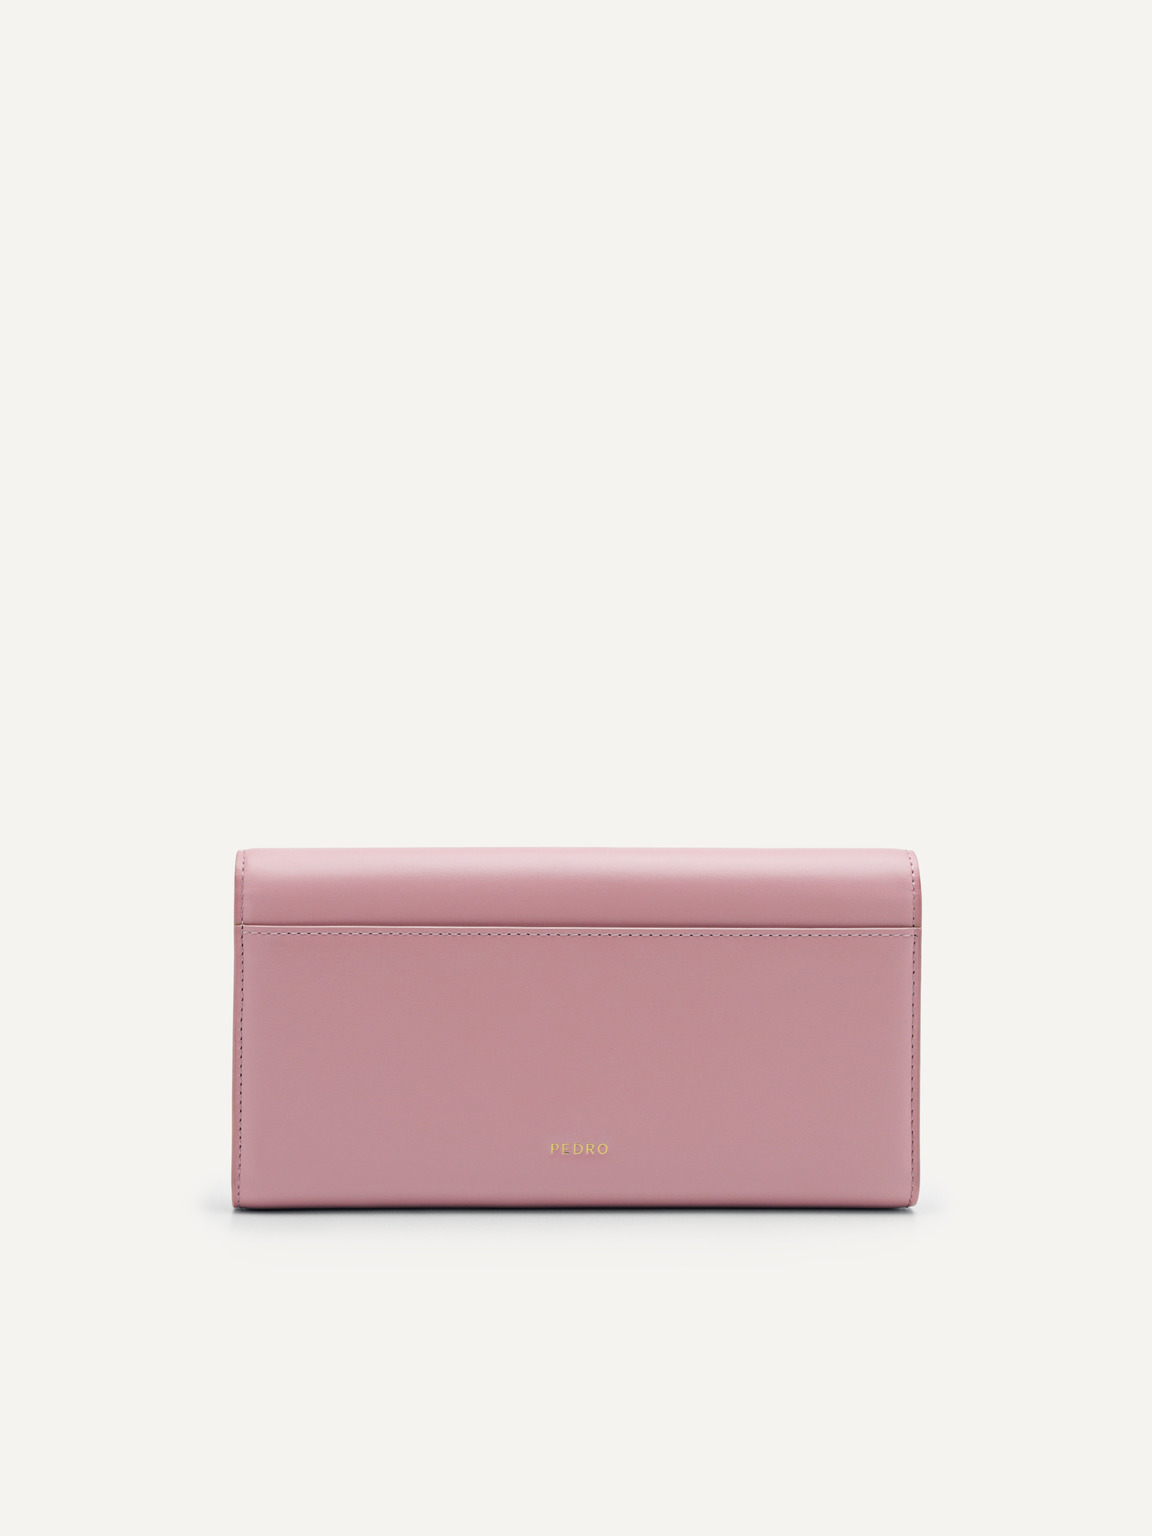 PEDRO Studio Leather Bi-Fold Wallet, Blush